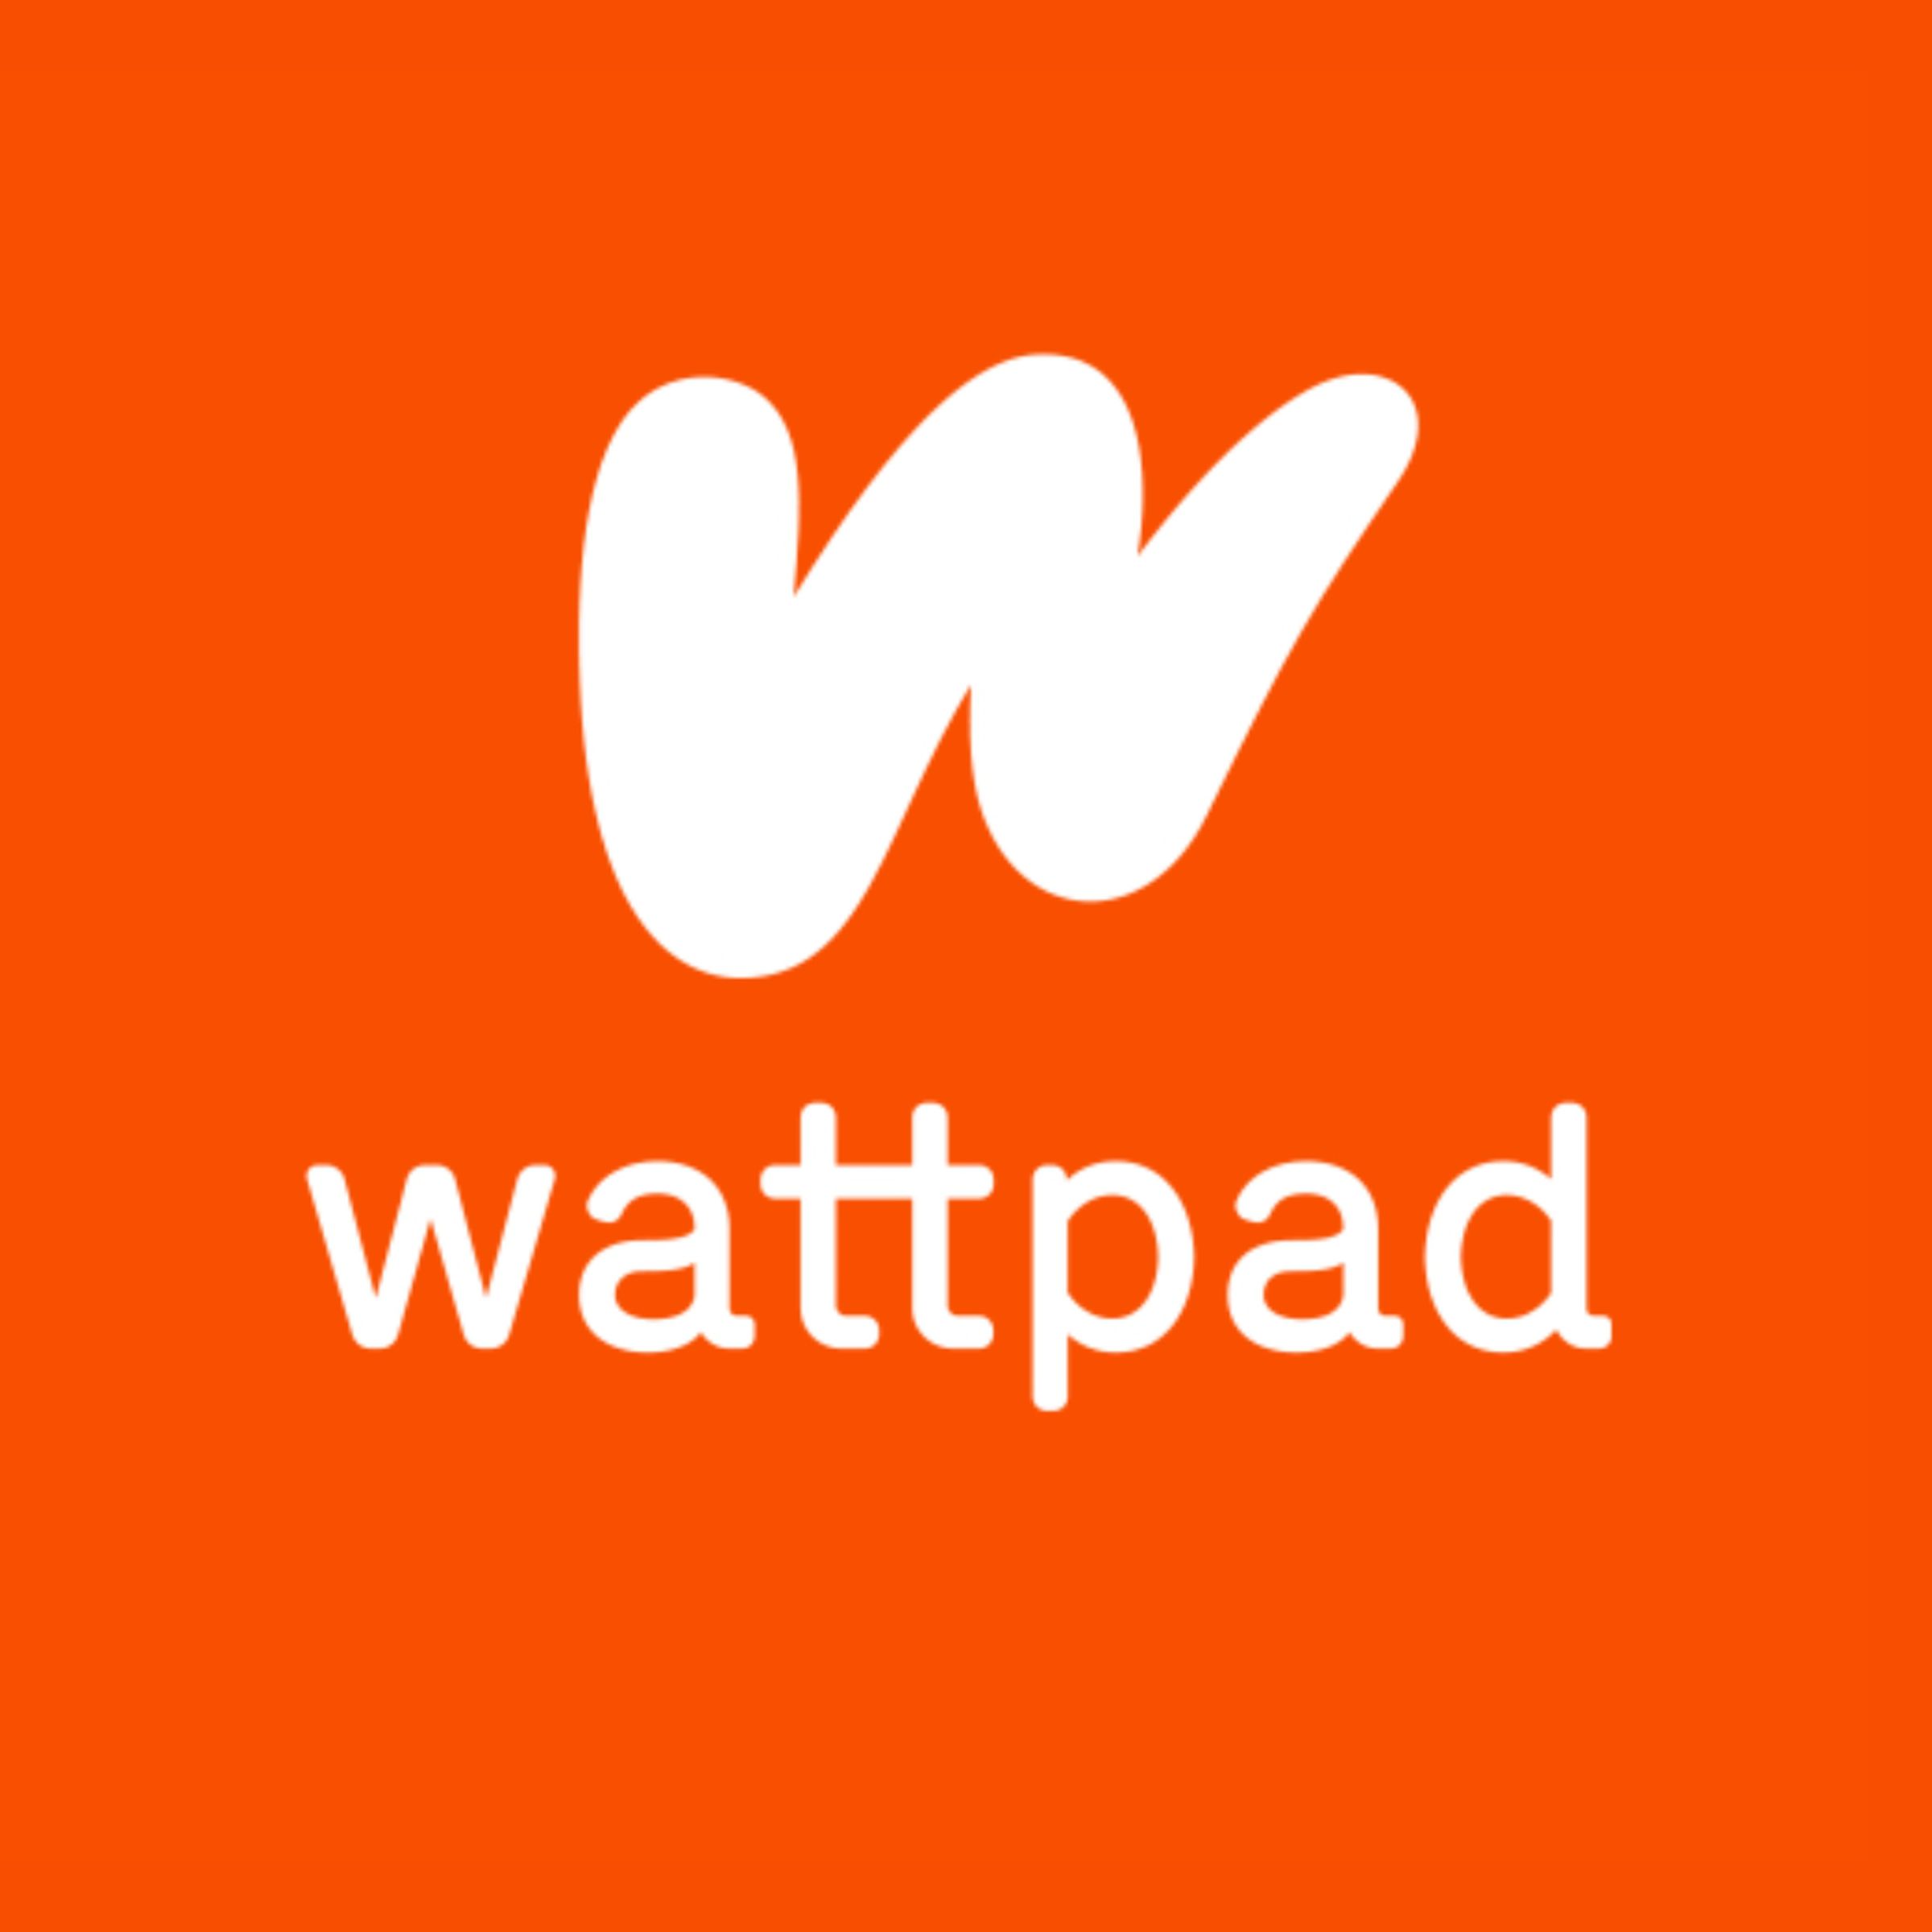 The Wattpad logo in white against an orange background.